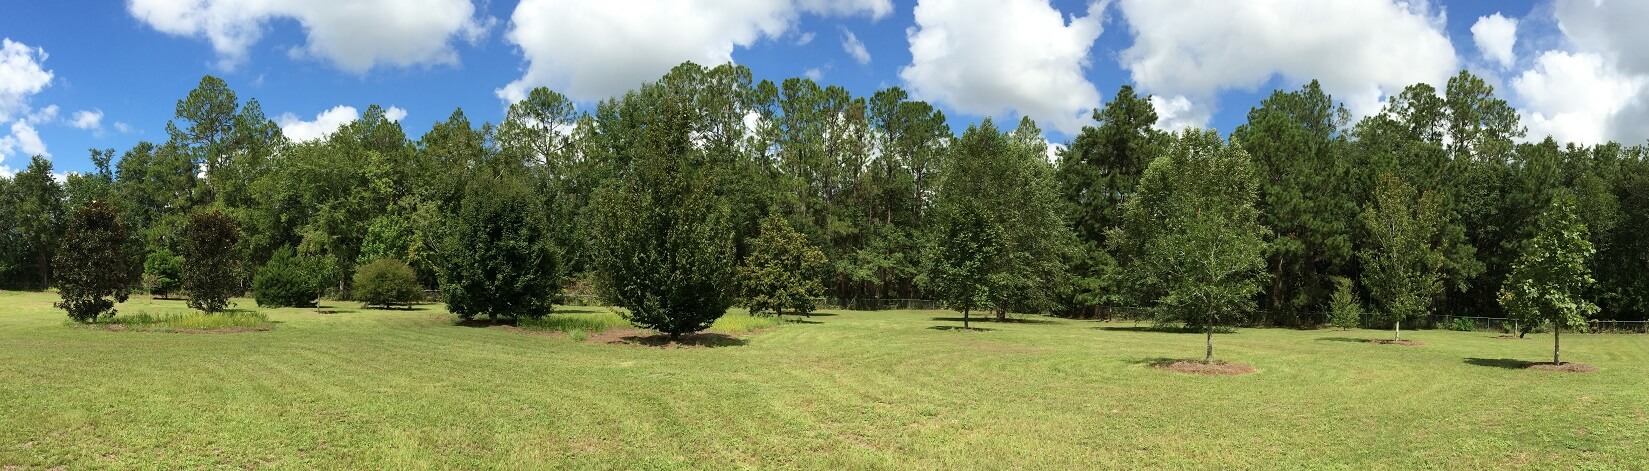 Arboretum - Field with Various Trees